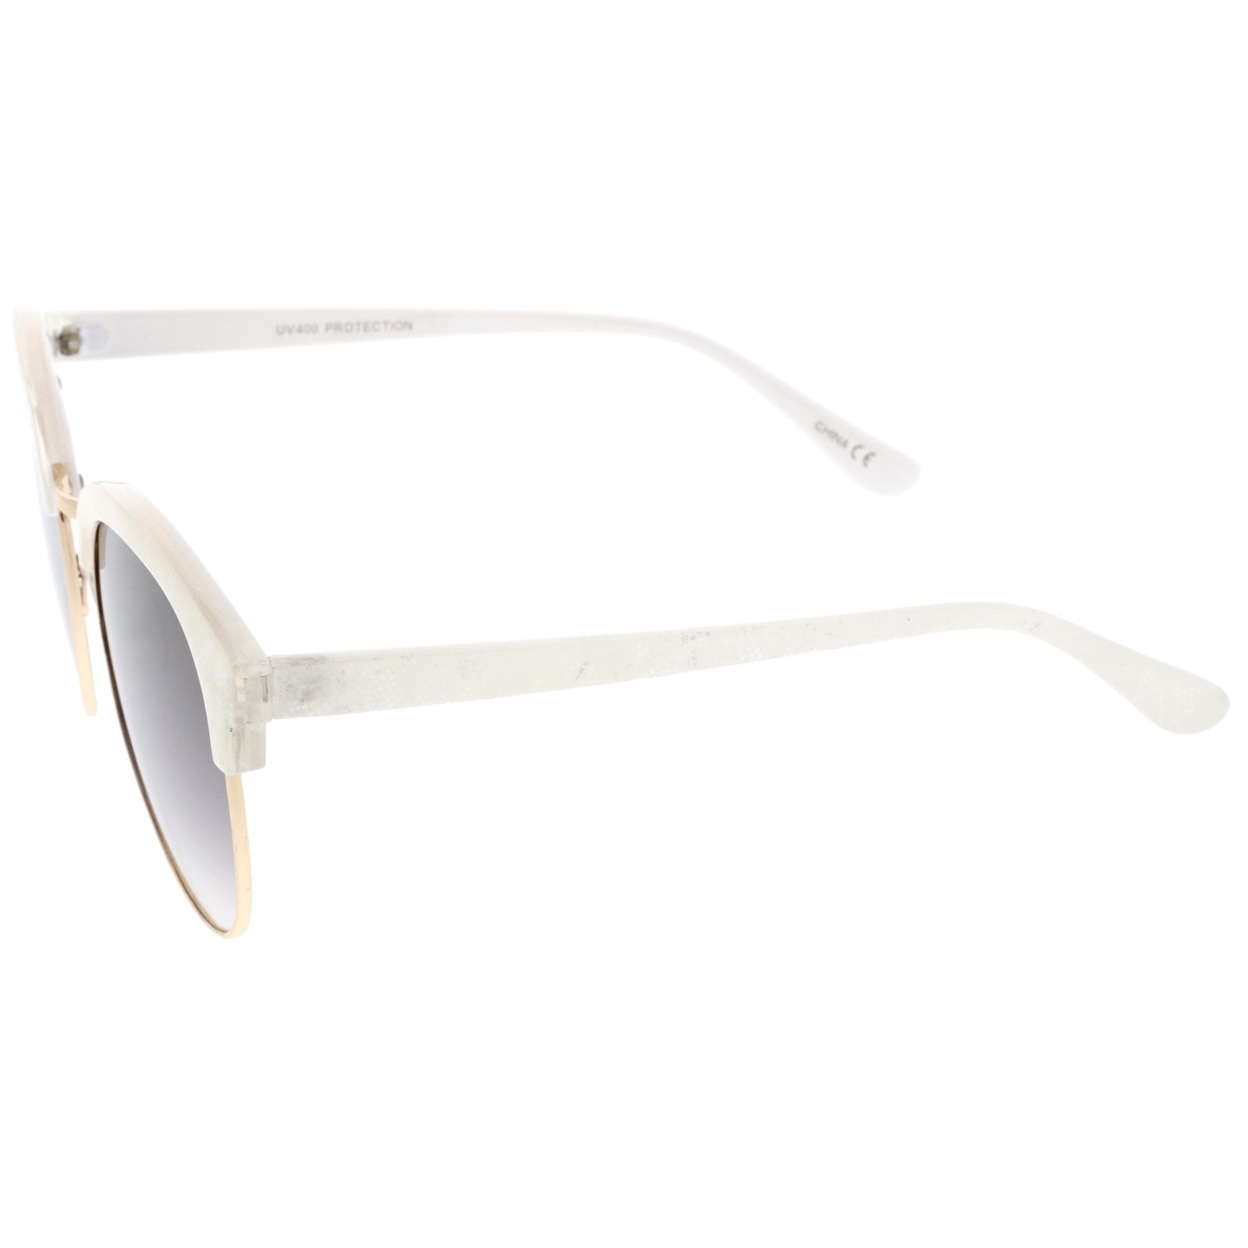 Oversize Metallic Horn Rimmed Colored Mirror Lens Half-Frame Sunglasses 58mm - Light Grey Gold / Magenta Mirror